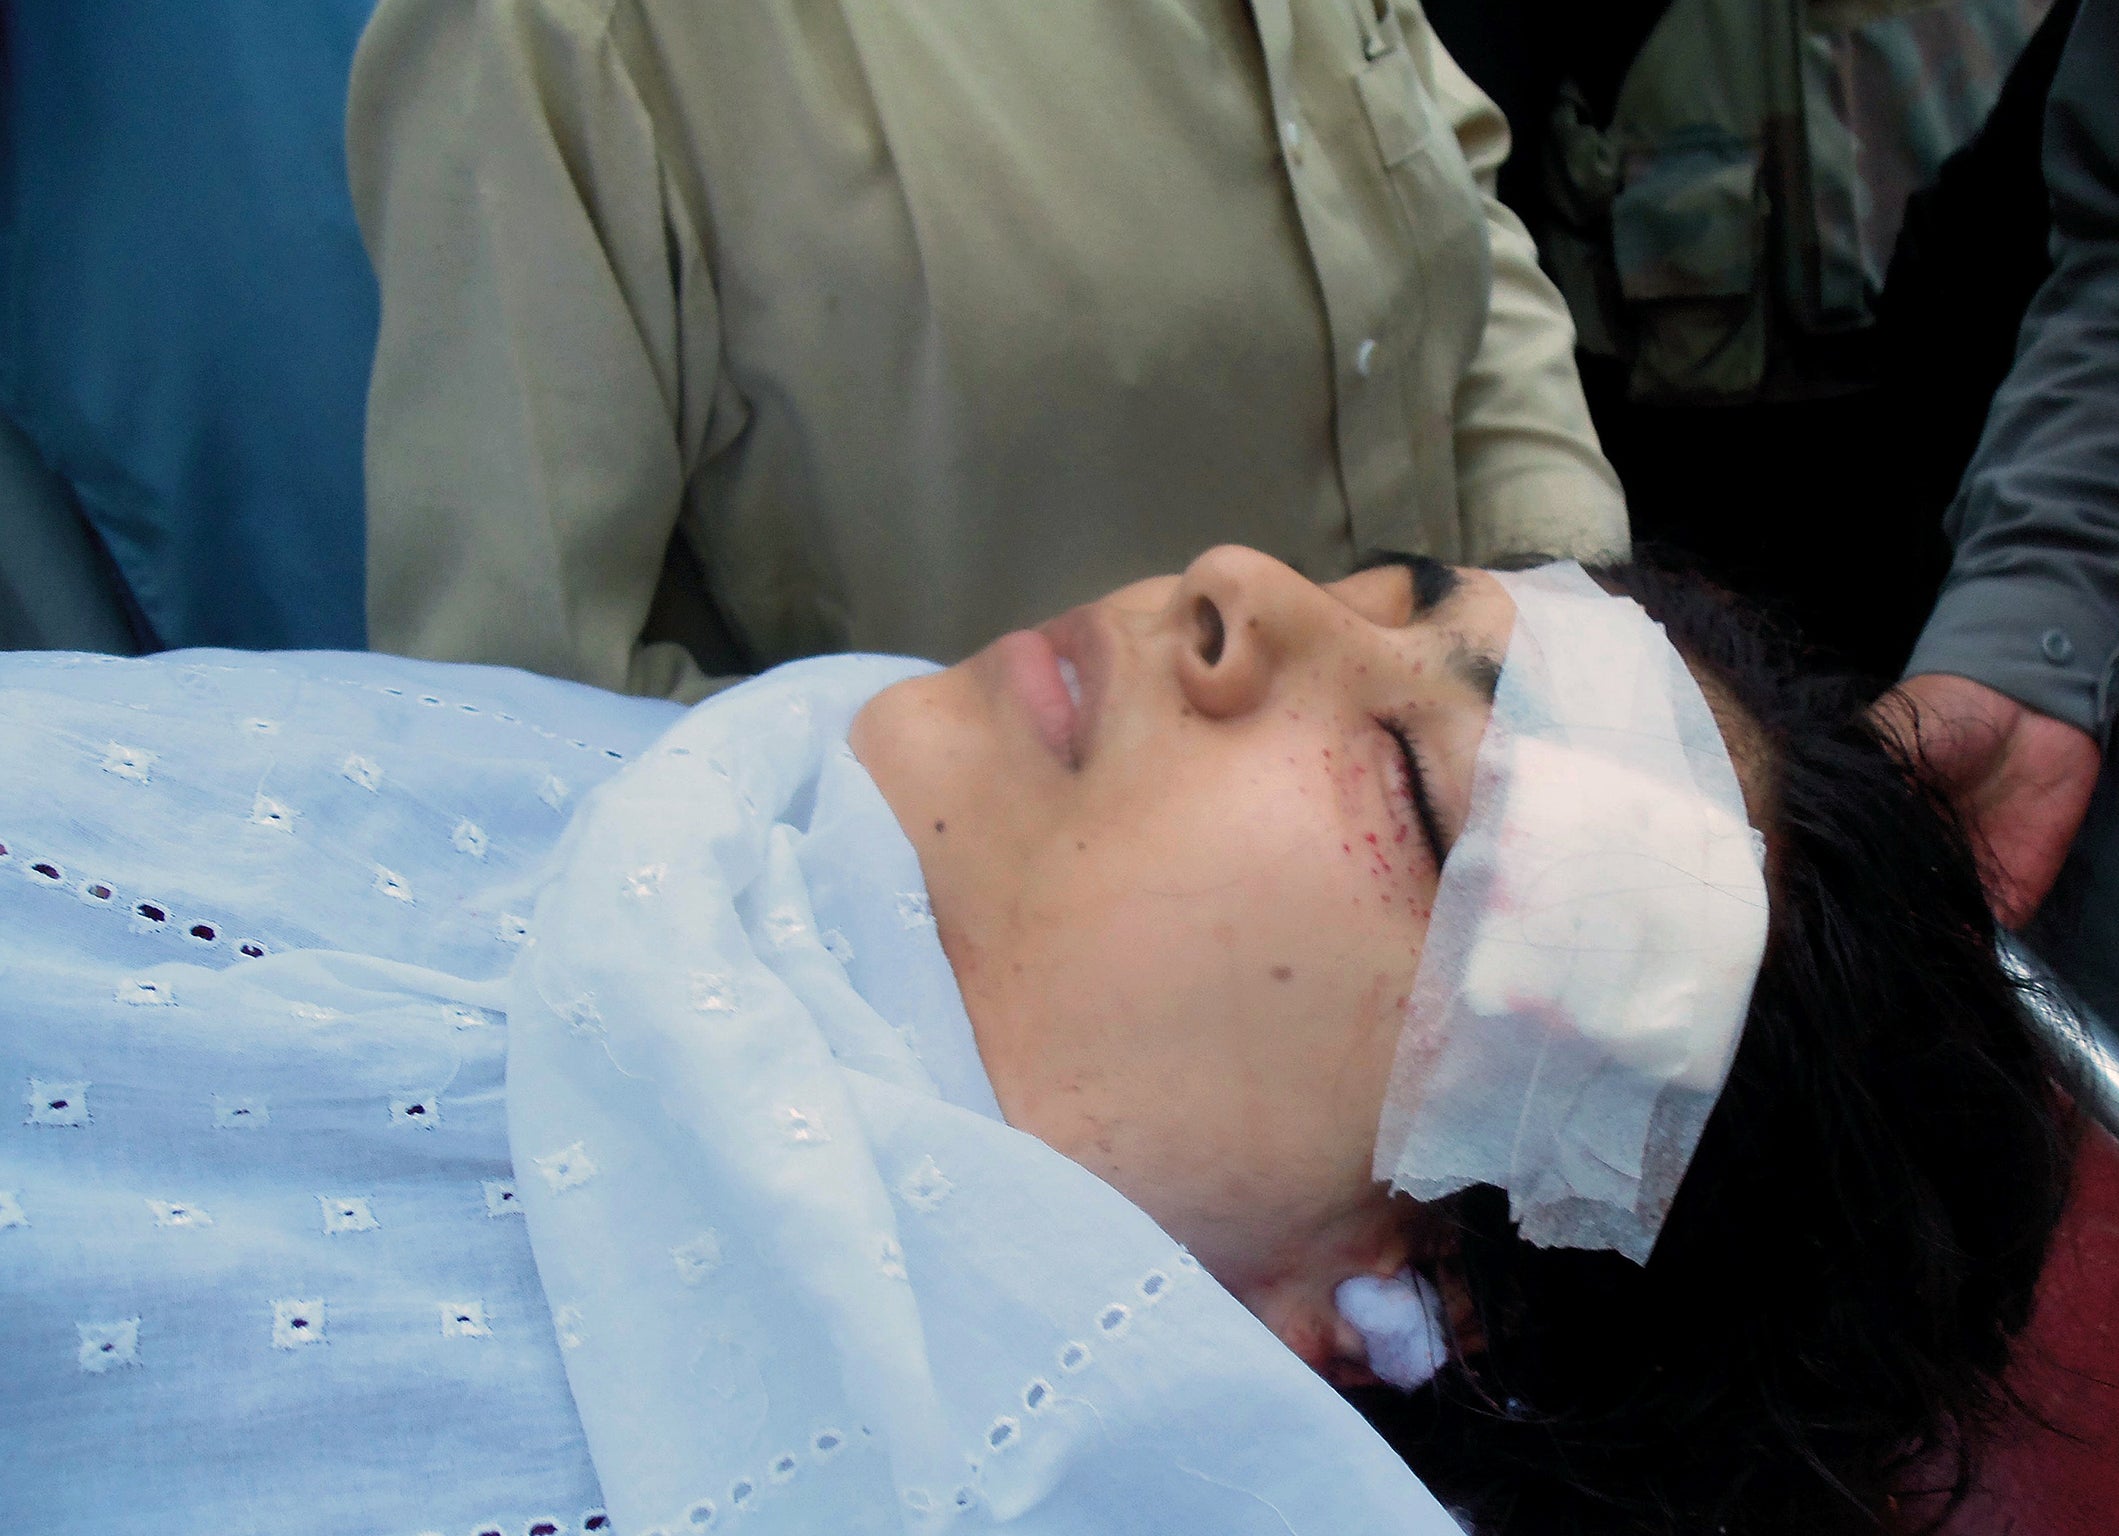 Malala Yousafzai was attacked by gunmen in Mingora, Pakistan on October 9, 2012